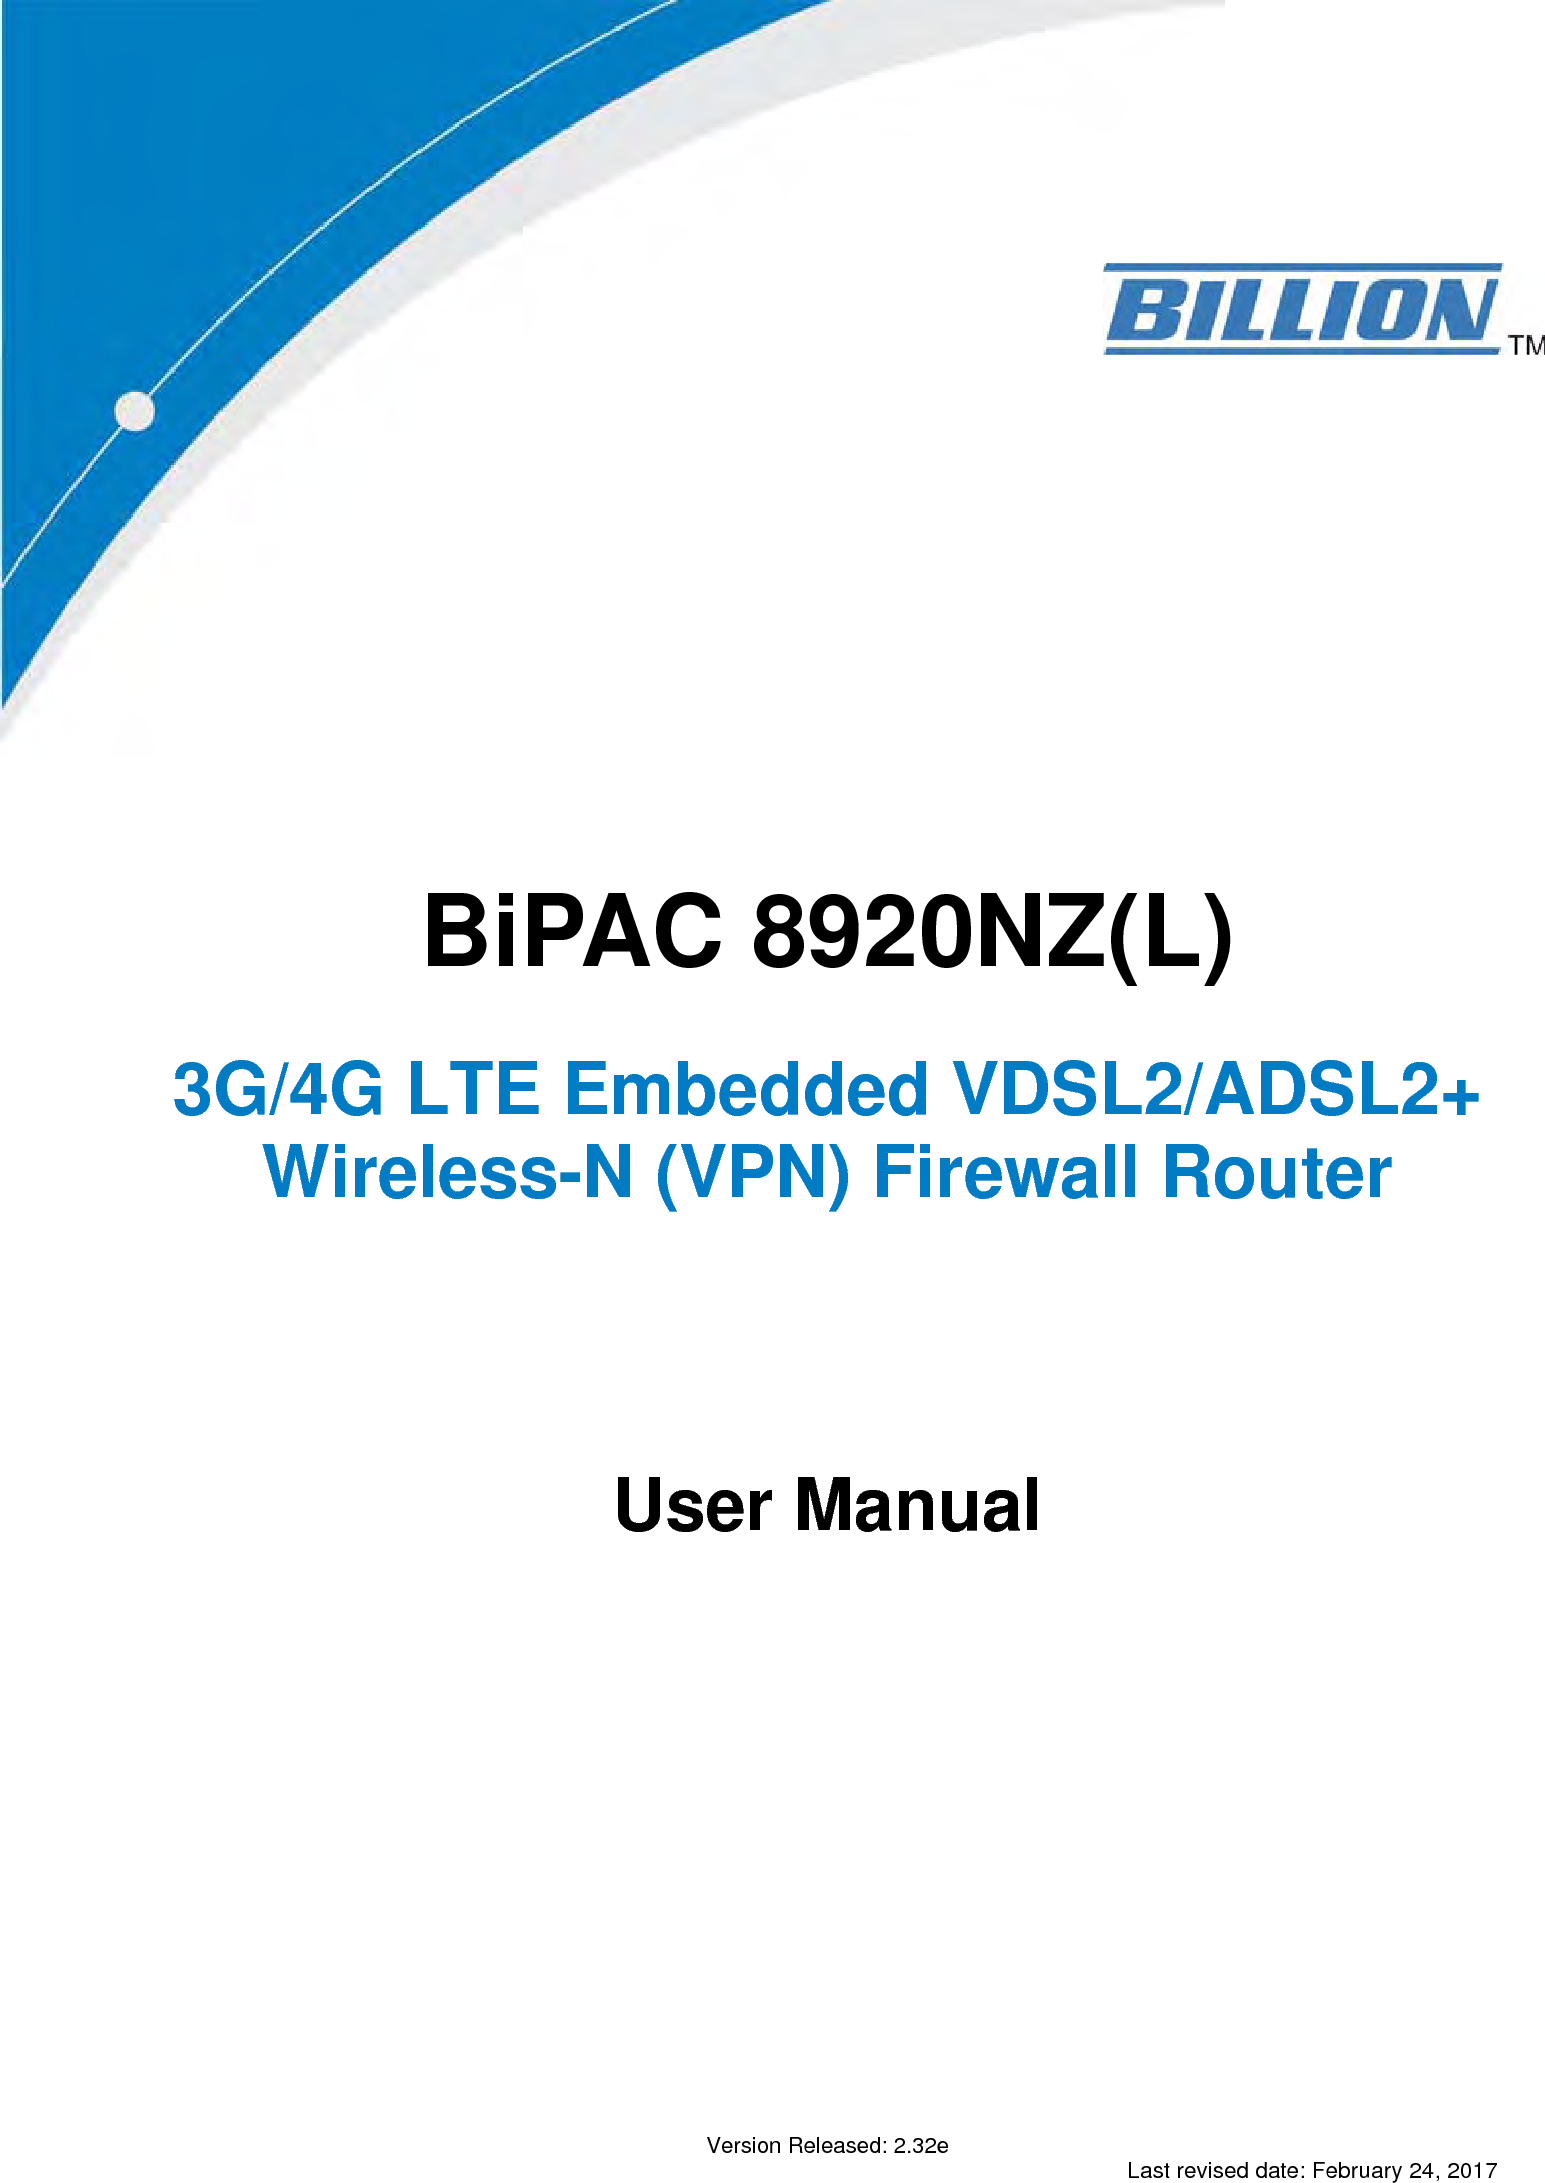                   BiPAC 8920NZ(L)   3G/4G LTE Embedded VDSL2/ADSL2+ Wireless-N (VPN) Firewall Router          User Manual                      Version Released: 2.32e Last revised date: February 24, 2017 